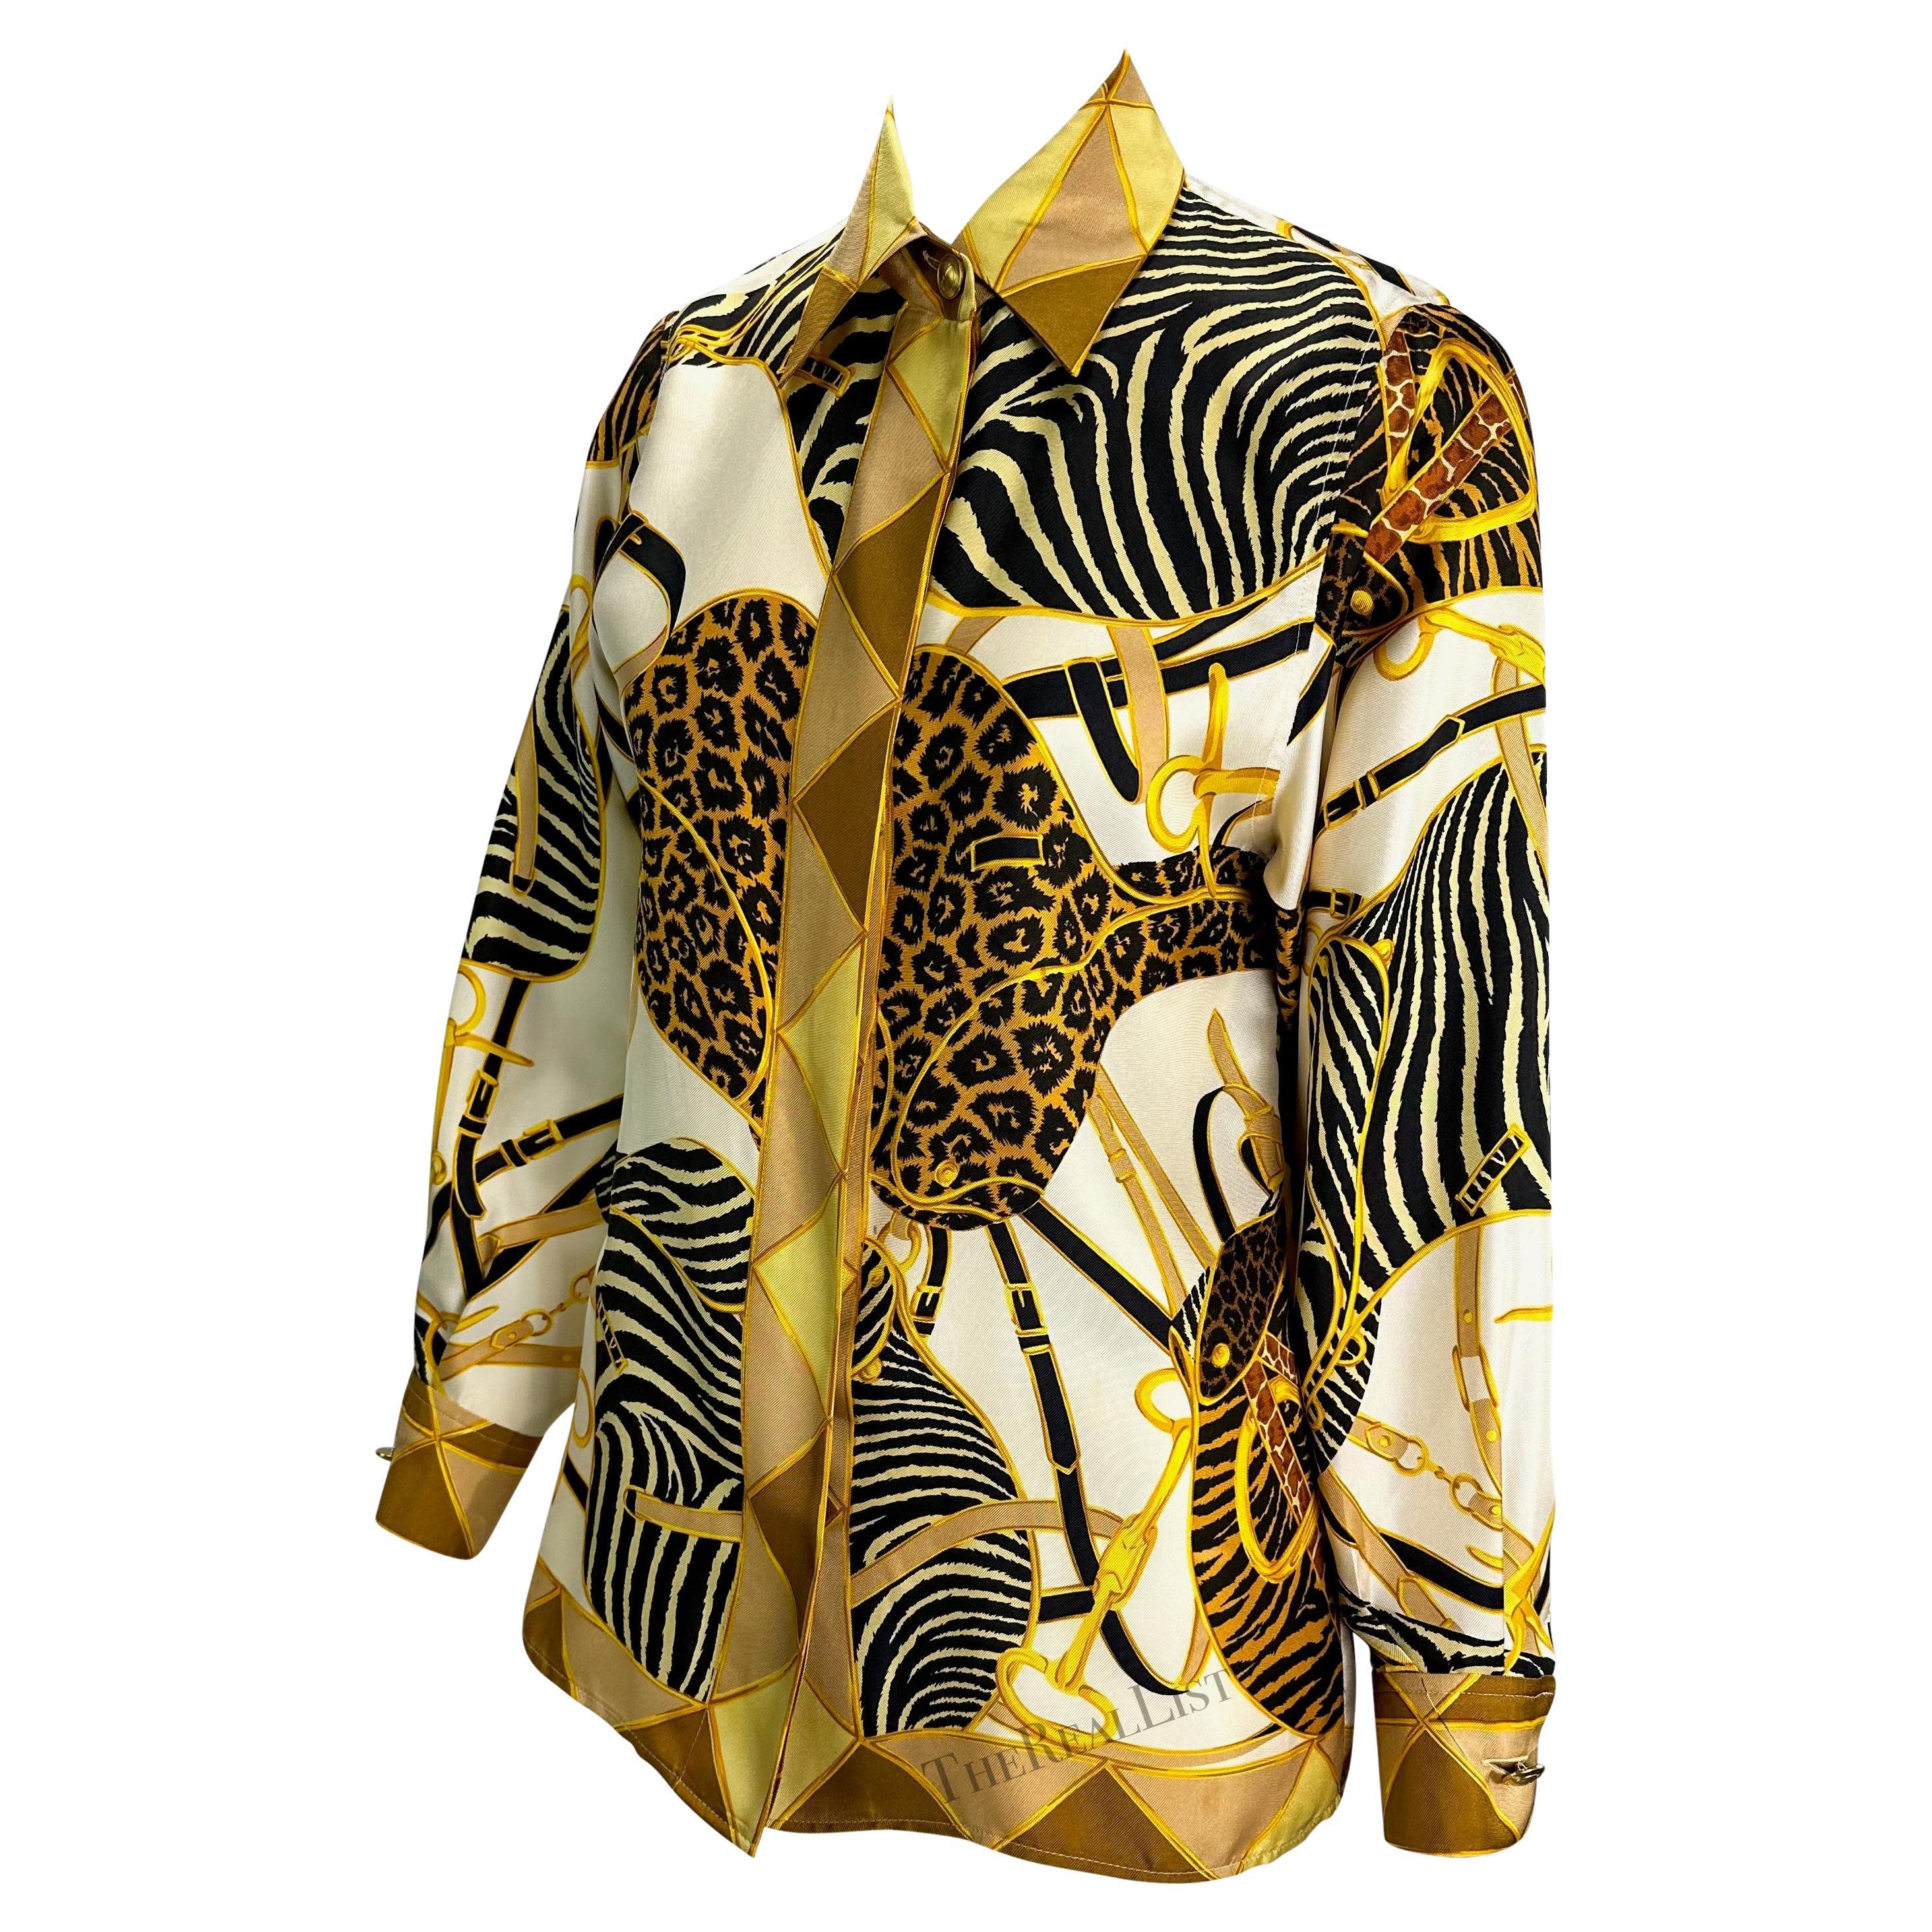 S/S 1993 Gucci Runway Animal Print Silk Collared GG Logo Button Down Shirt Excellent état - En vente à West Hollywood, CA